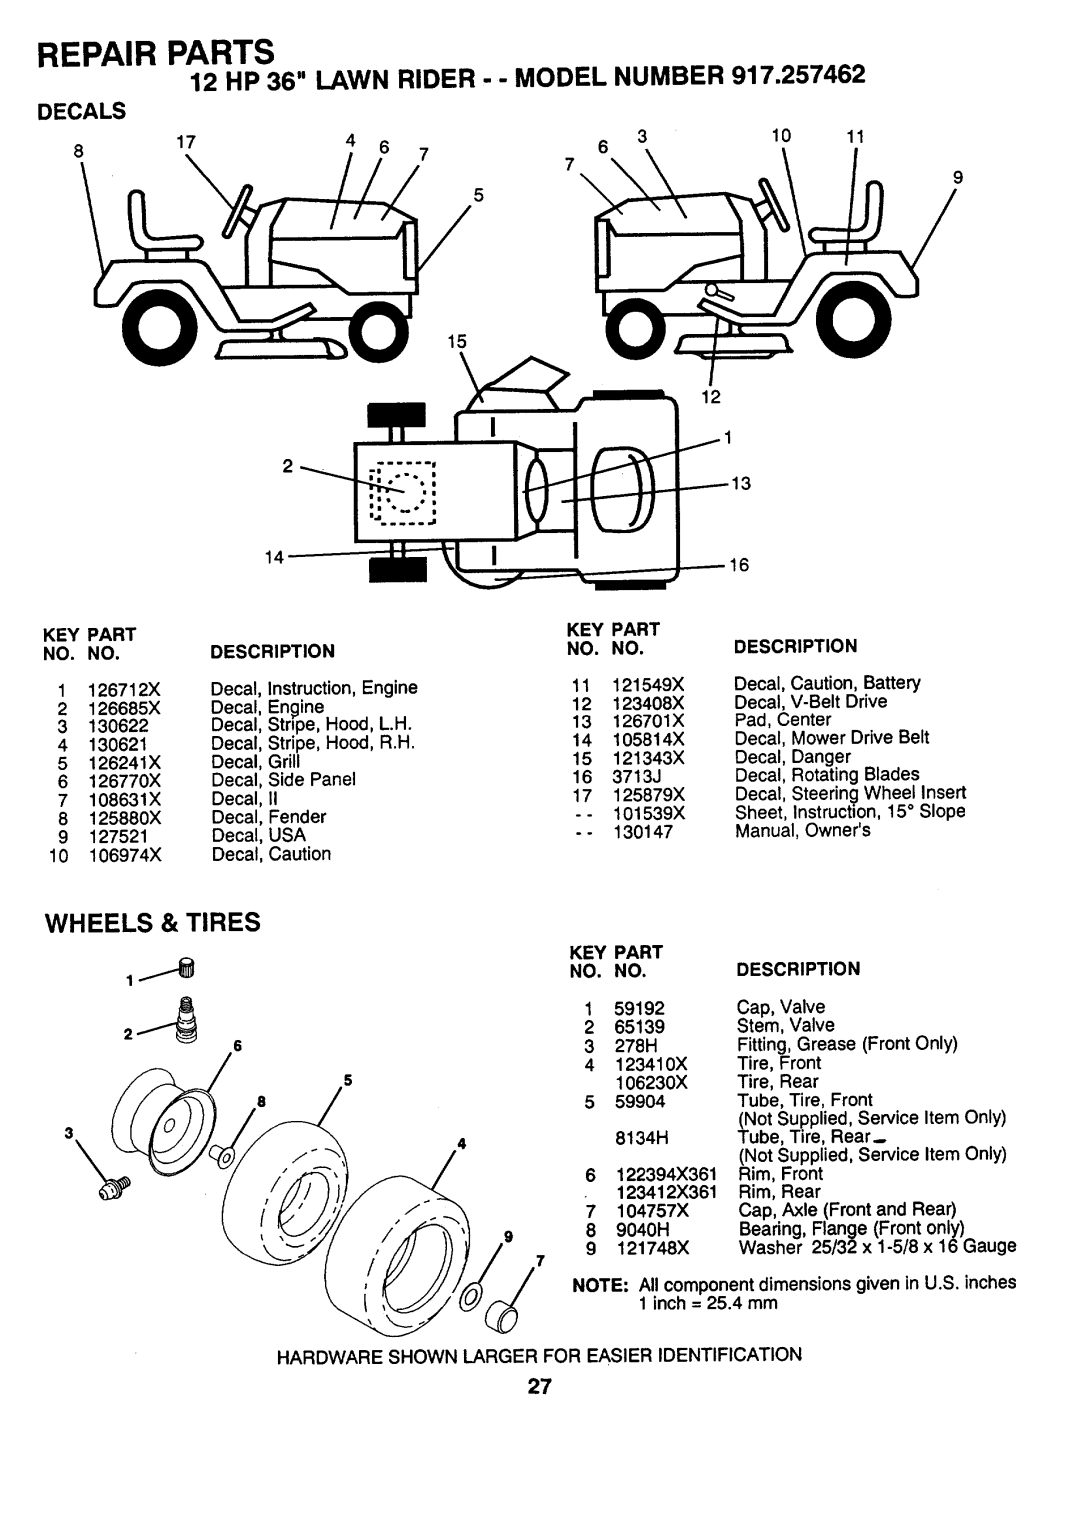 Sears 917.257462 manual Repair Parts, Wheels, Tires, Decals, 12 HP 36 LAWN RIDER - - MODEL NUMBER 